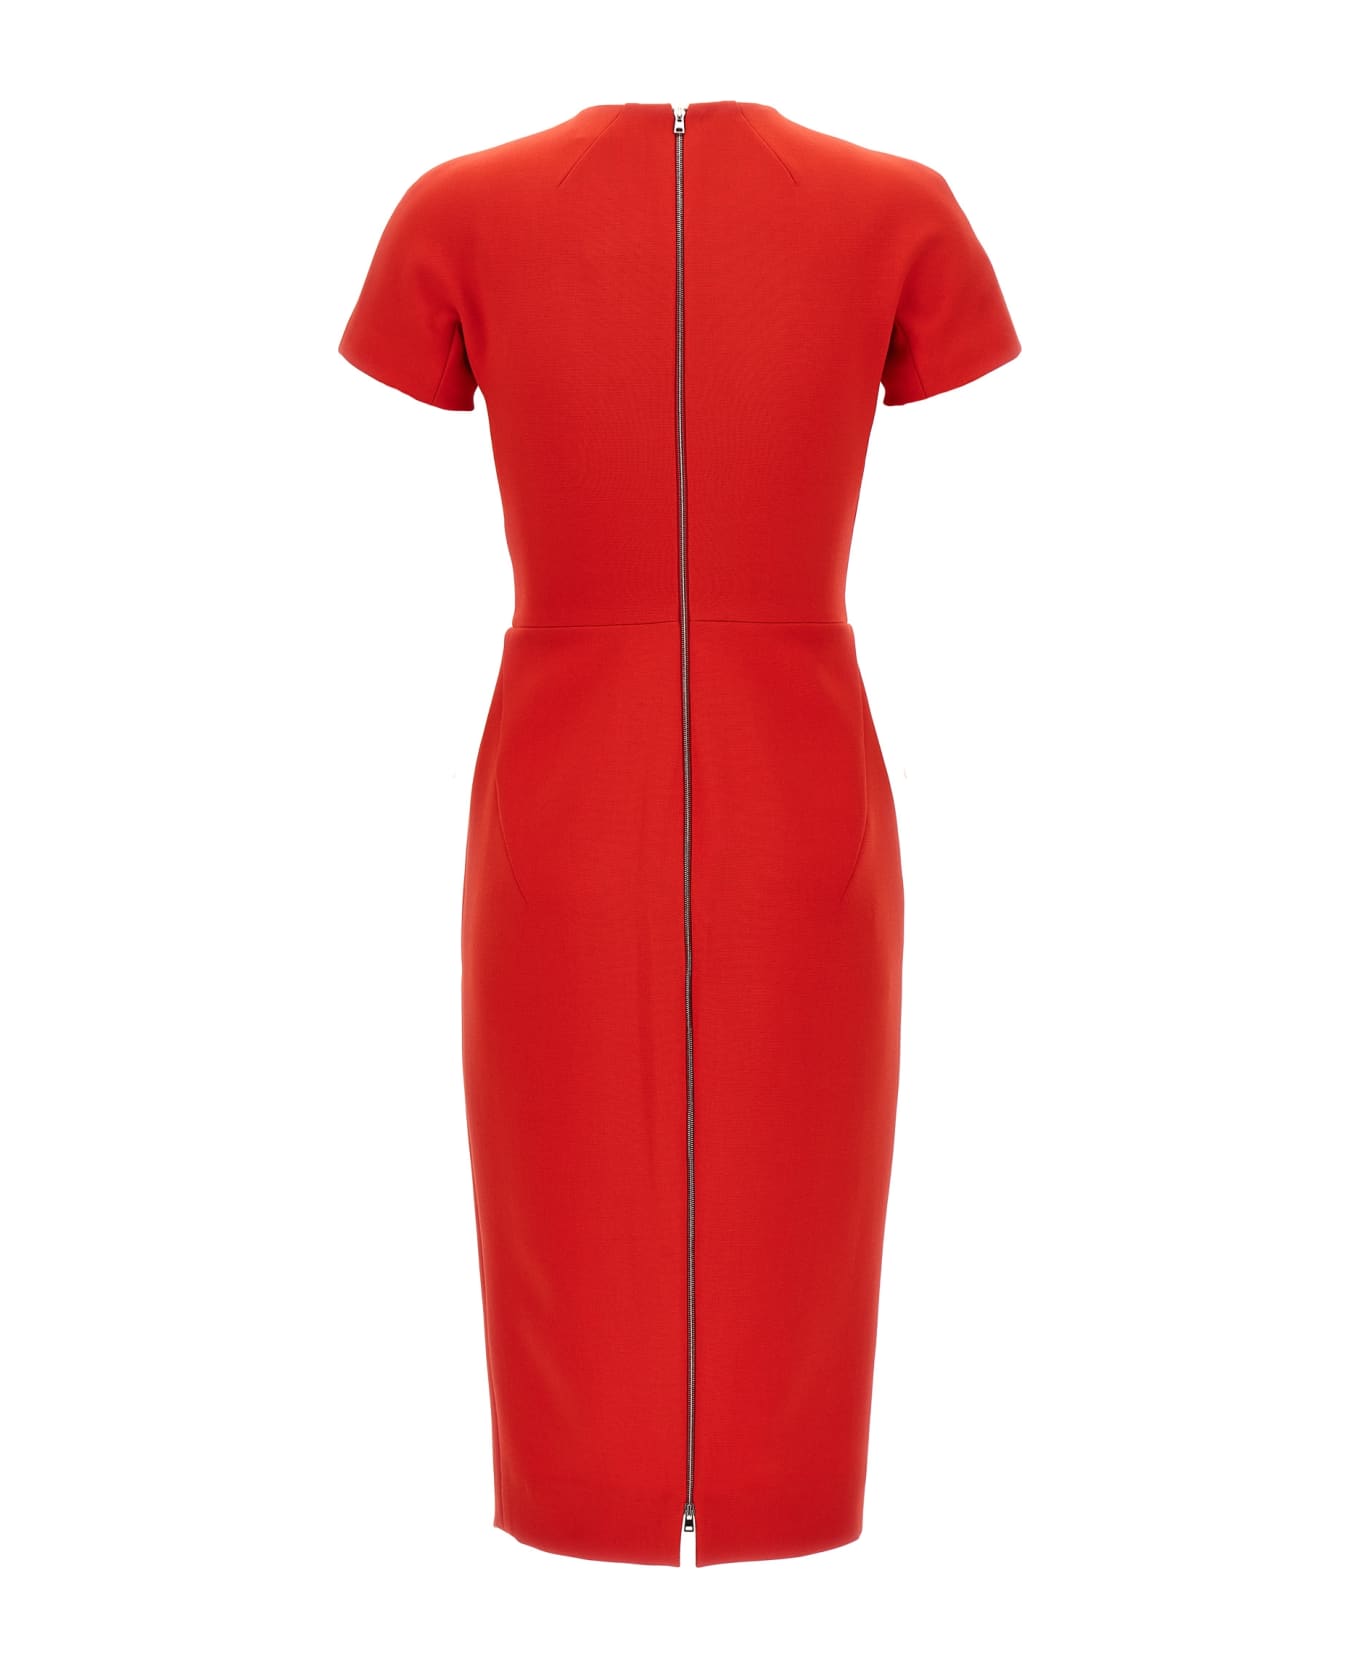 Victoria Beckham 'fitted T-shirt' Dress - Red